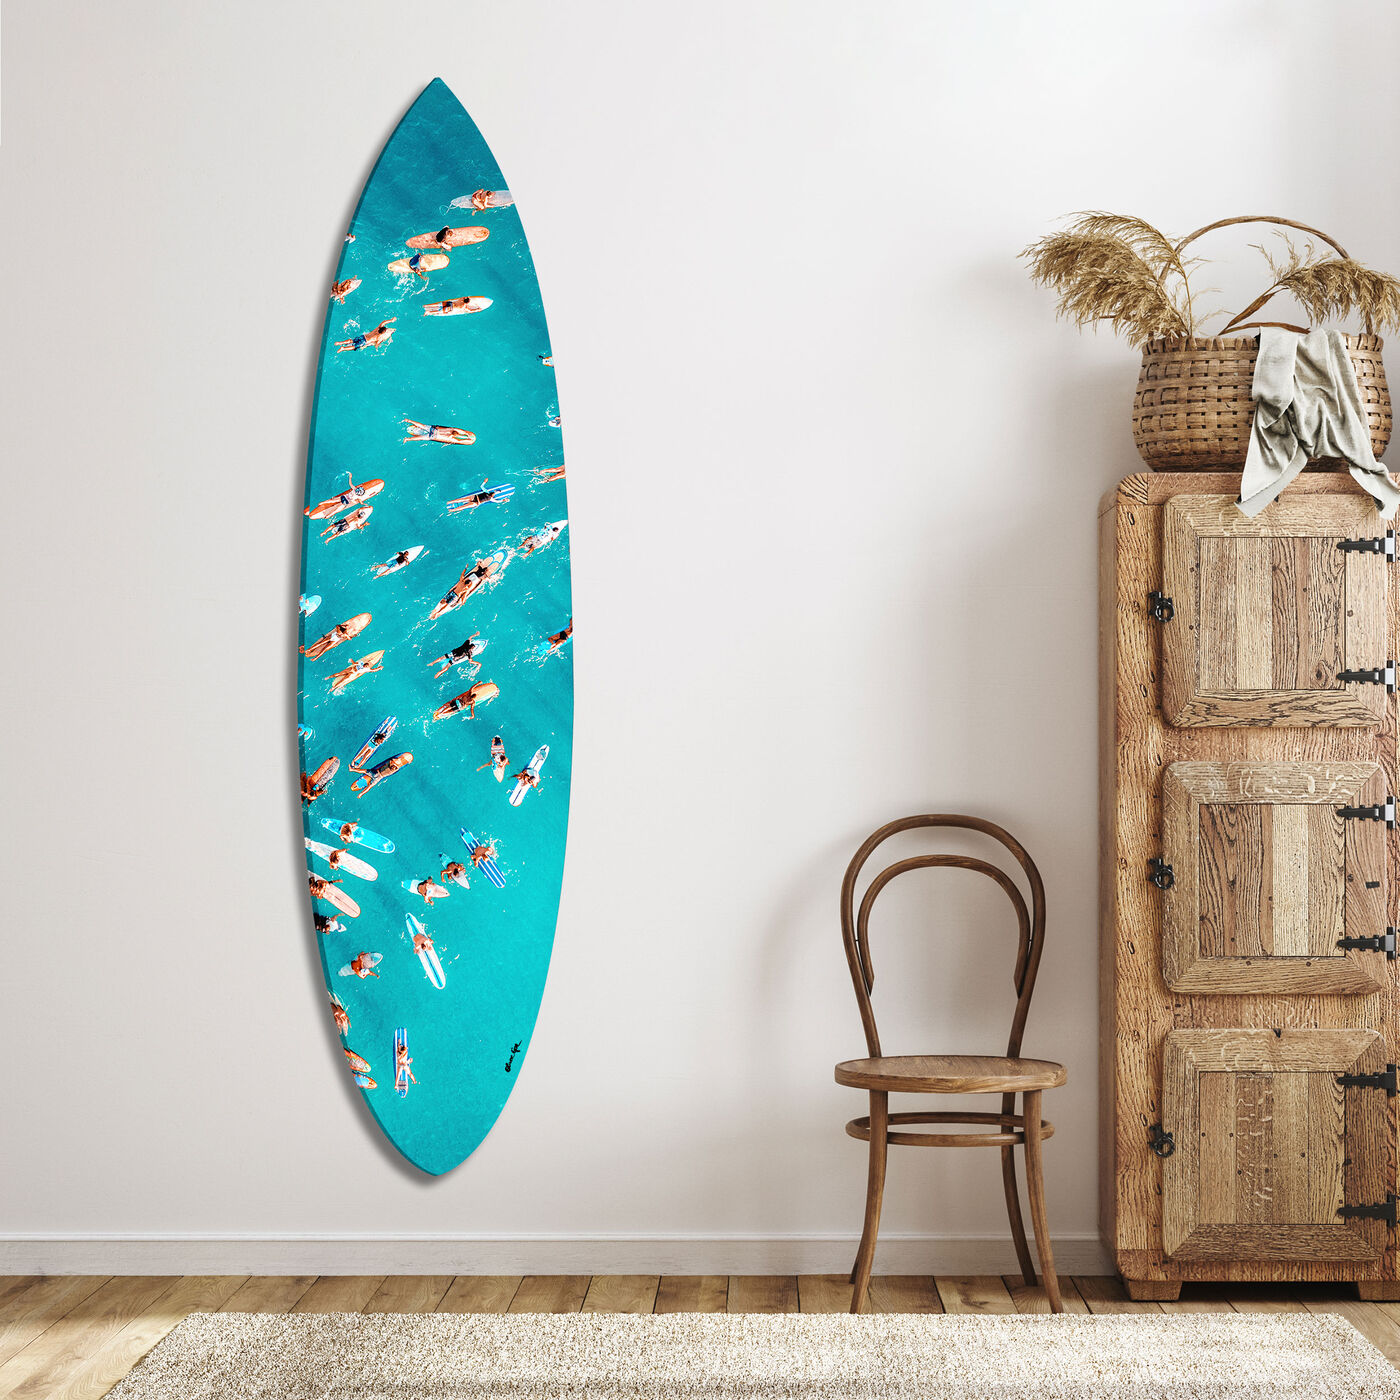 Together Aqua Surfboard